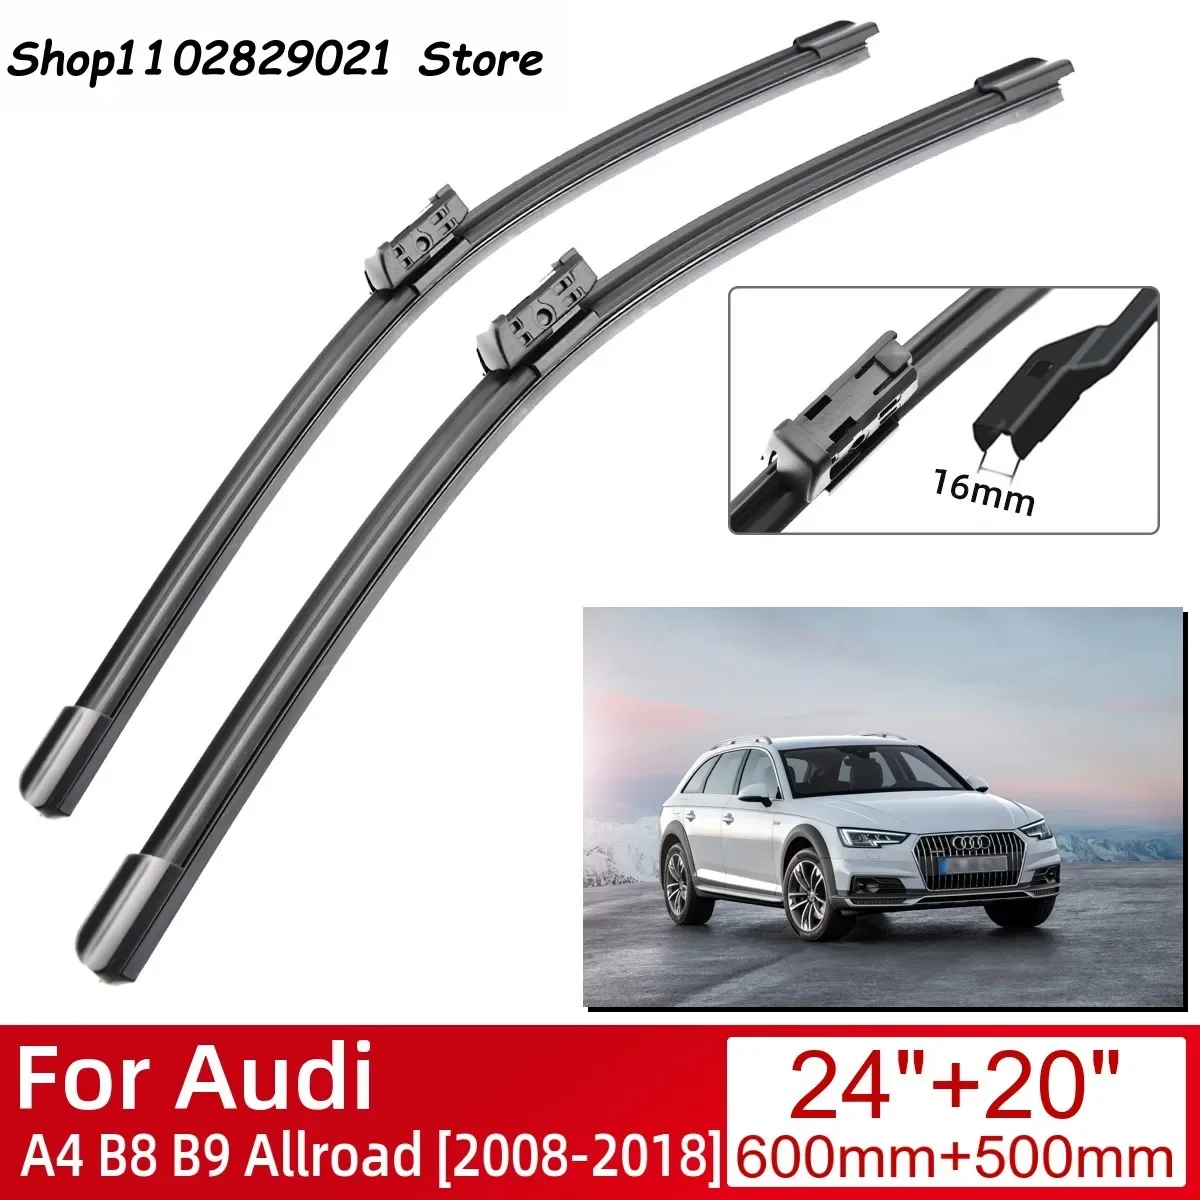 For Audi A4 B8 B9 Allroad 2008-2018 Car Accessories Front Windscreen Wip... - $24.59